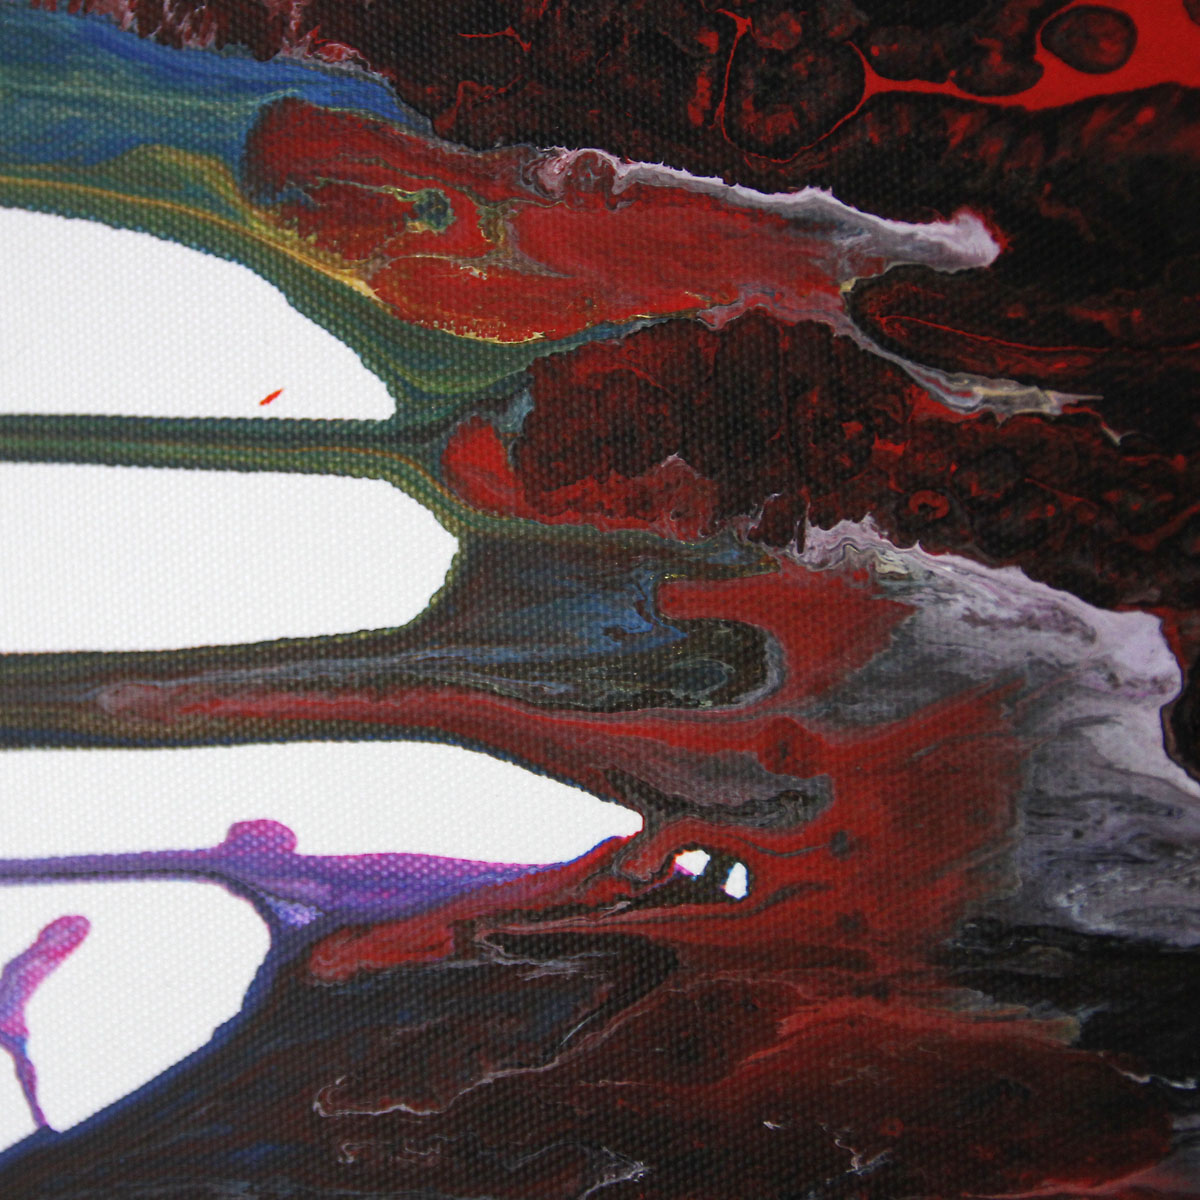 Acrylgemälde, G. Hung: "Psychedelic Blossom I" (ri), Unikat/Original